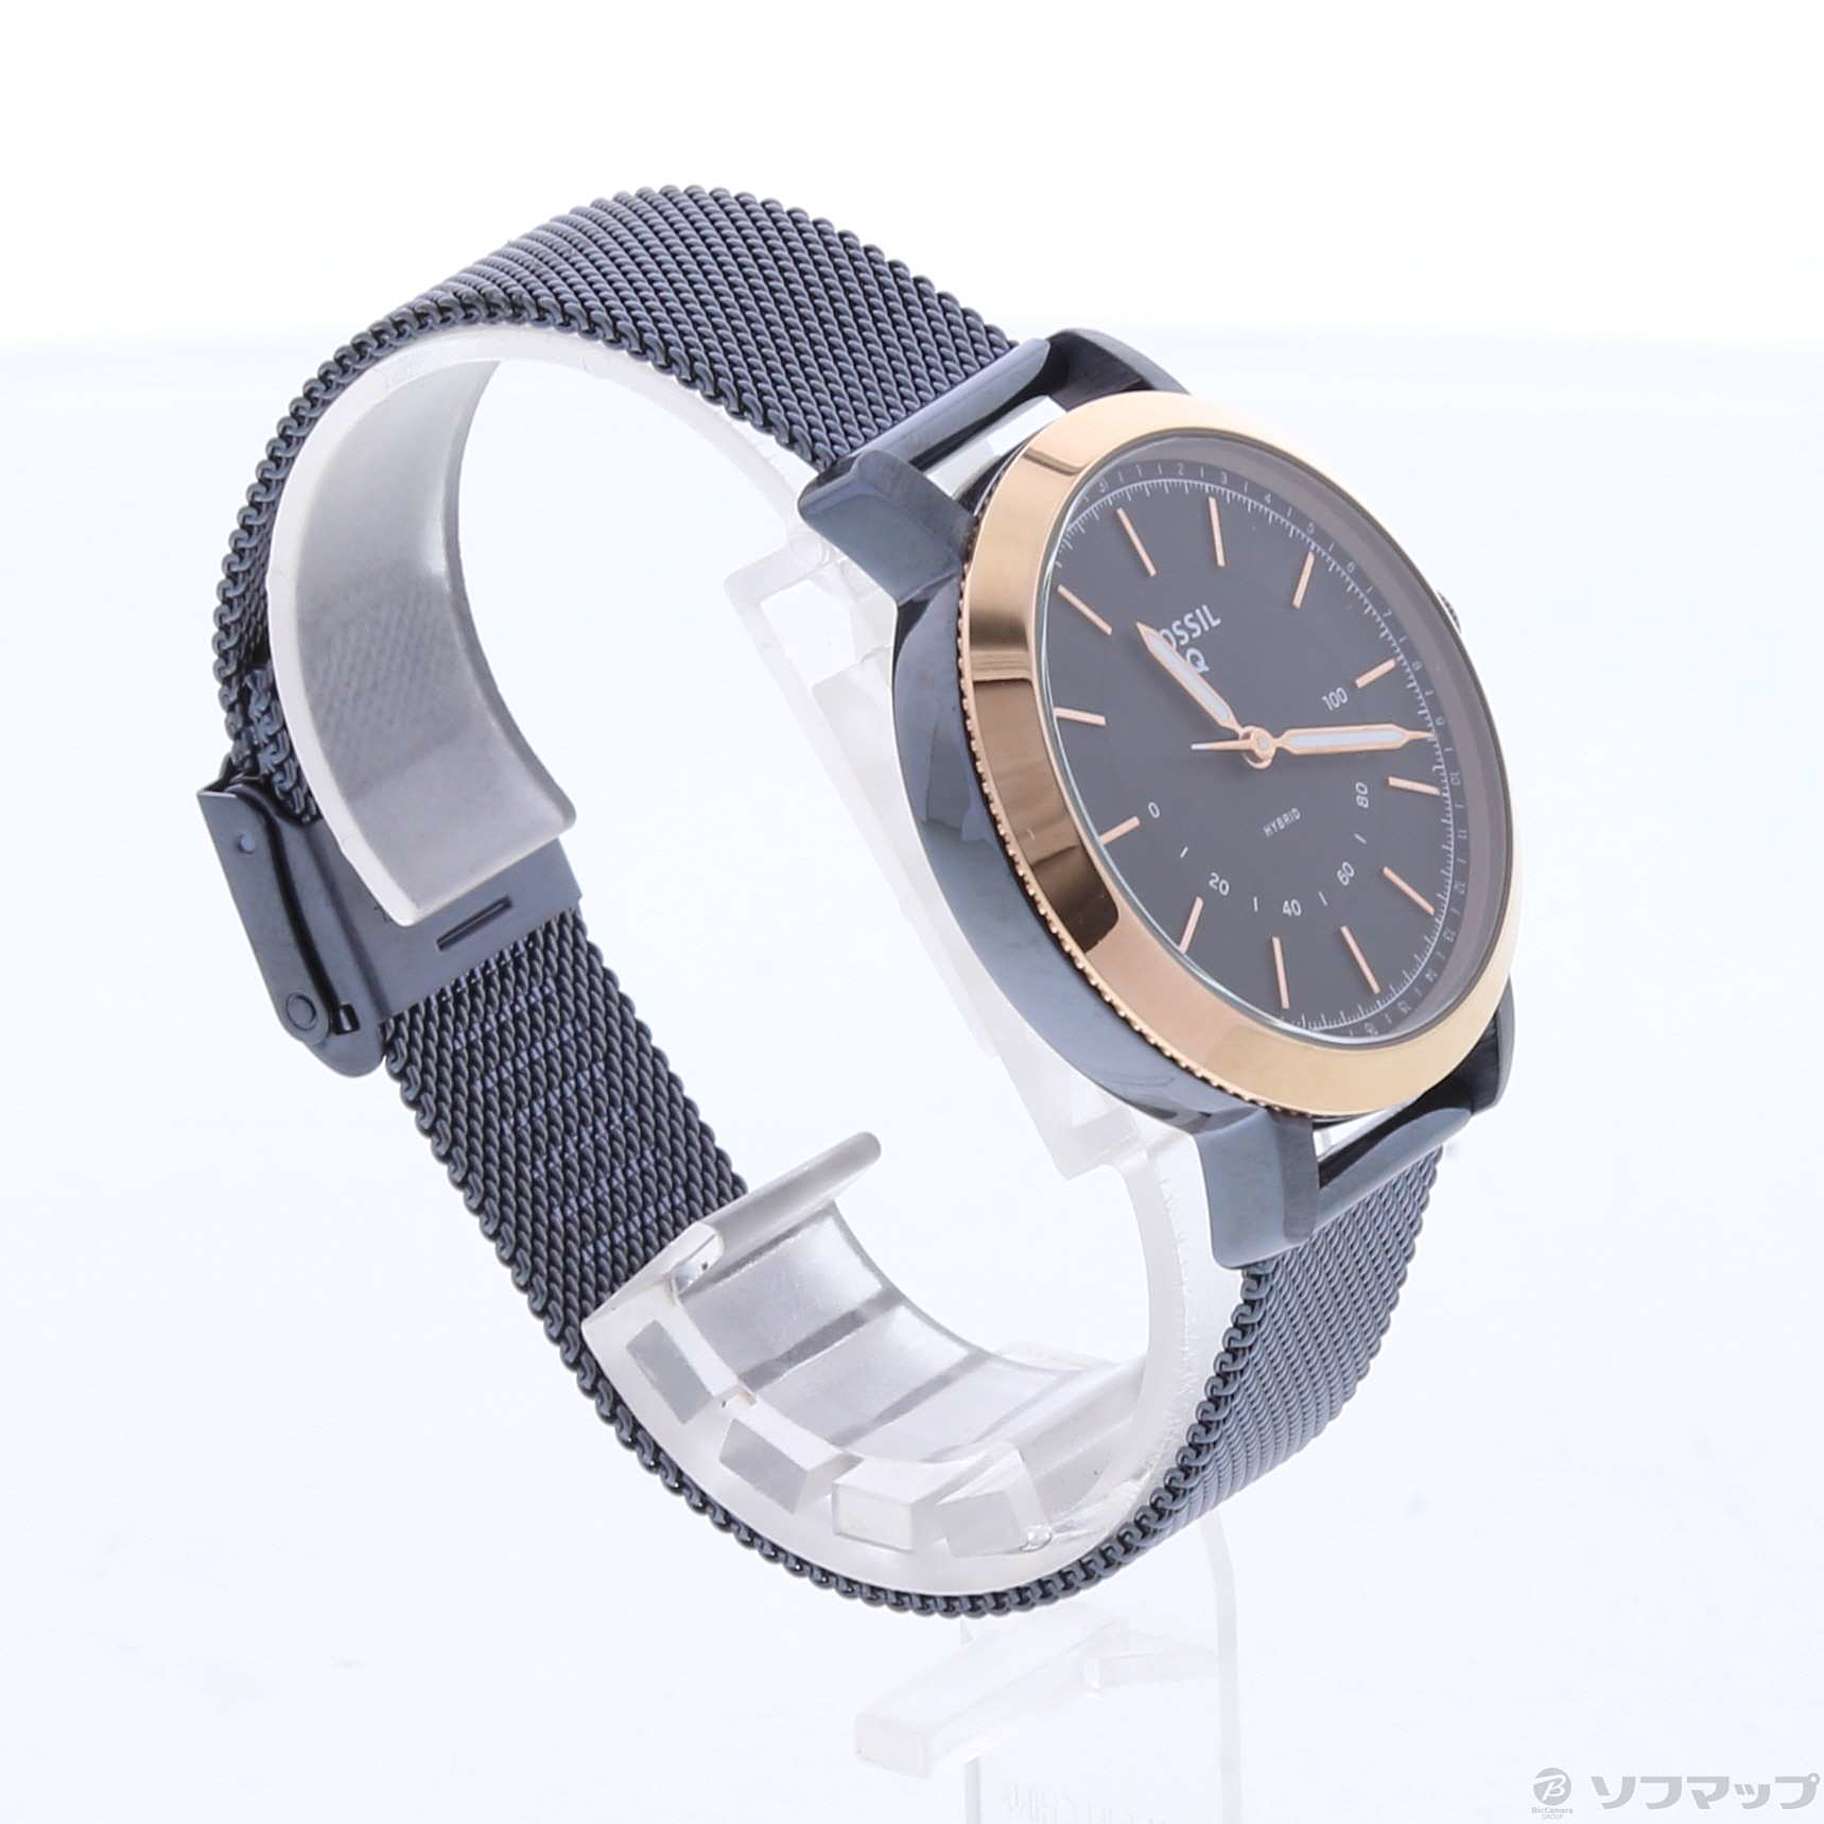 中古】セール対象品 〔展示品〕 FOSSIL Q Hybrid Smartwatch FTW5031